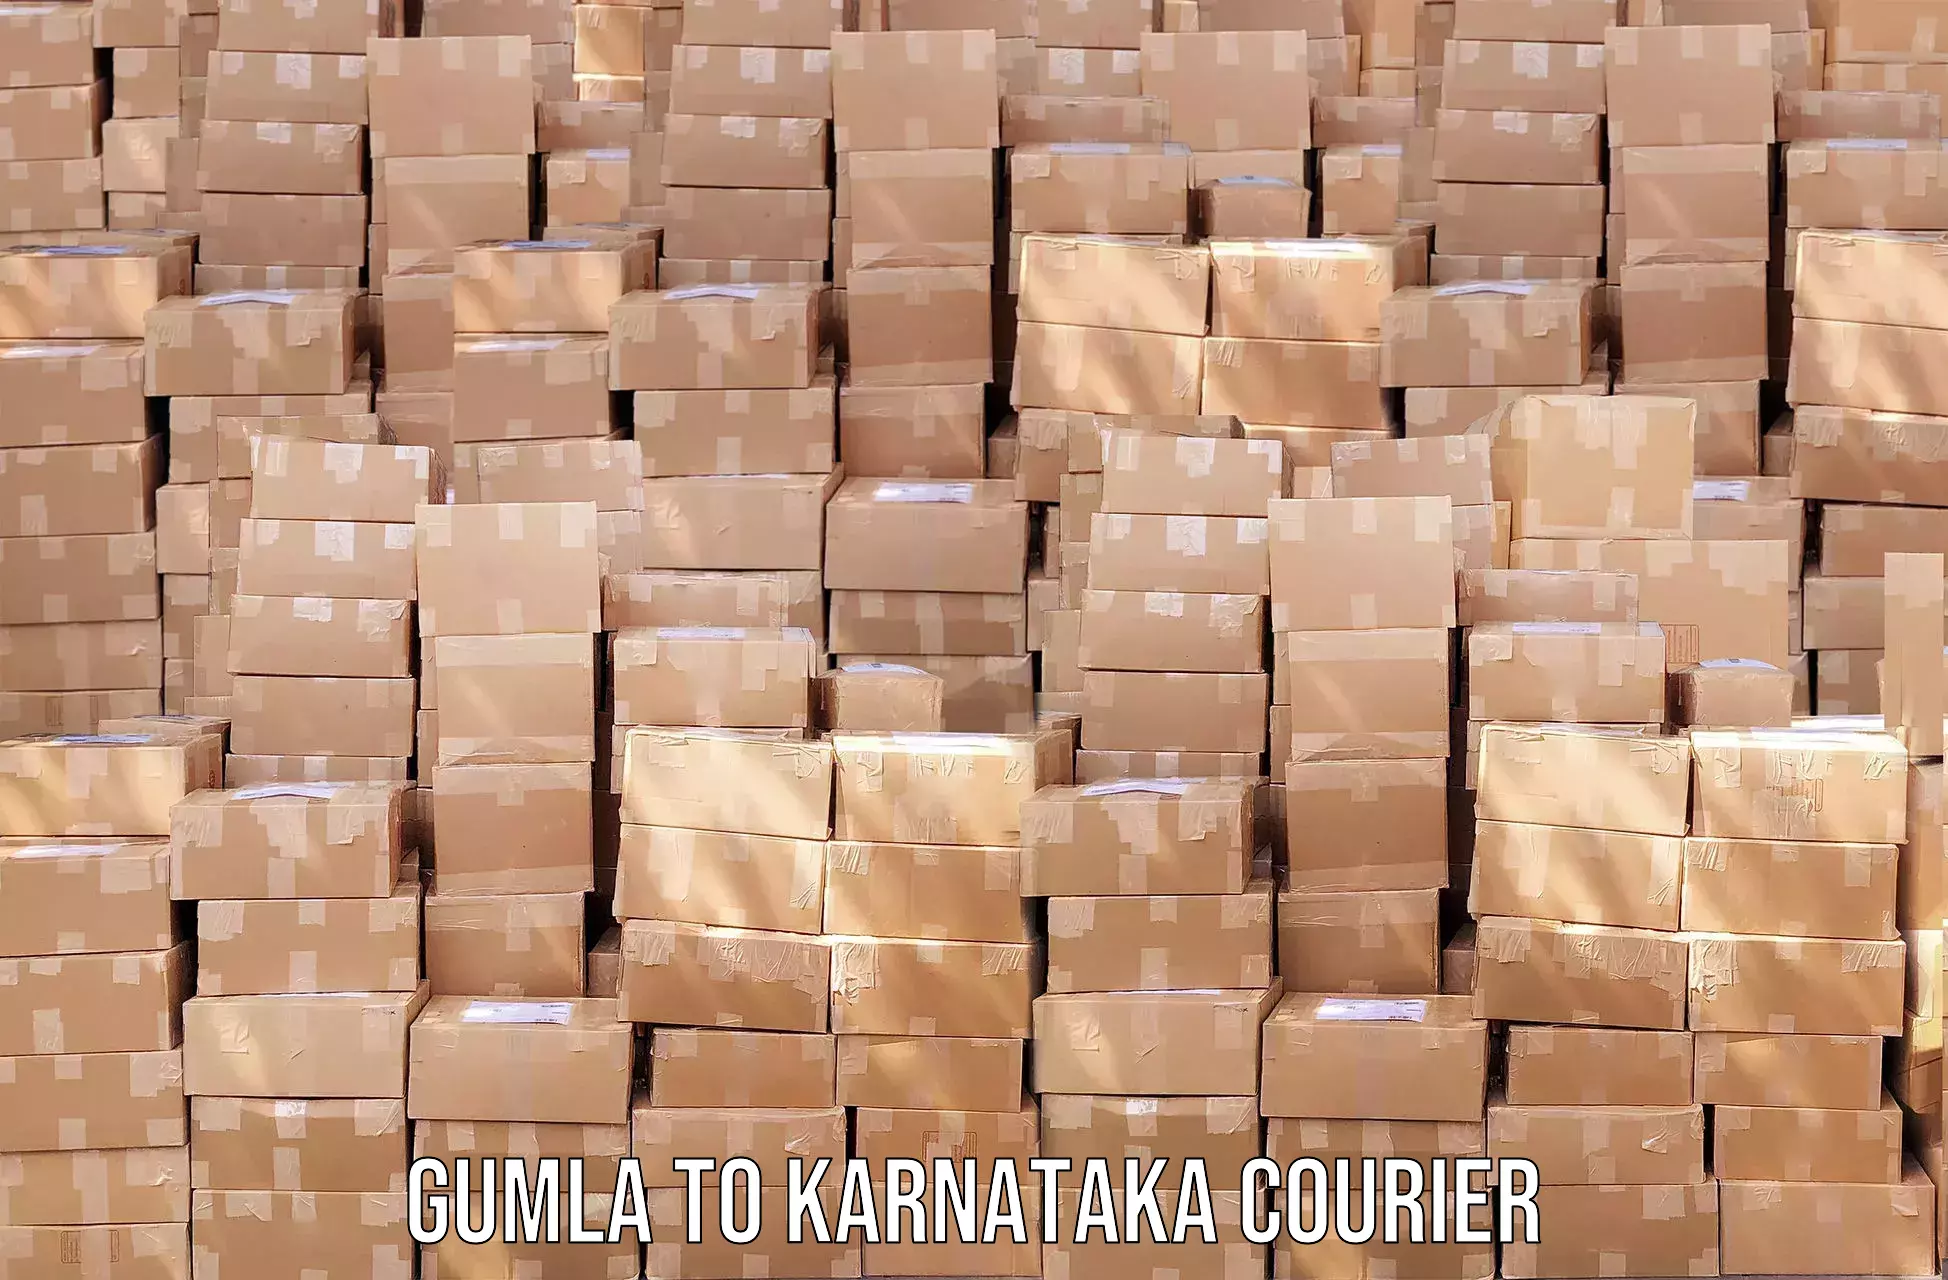 Courier membership in Gumla to Belagavi